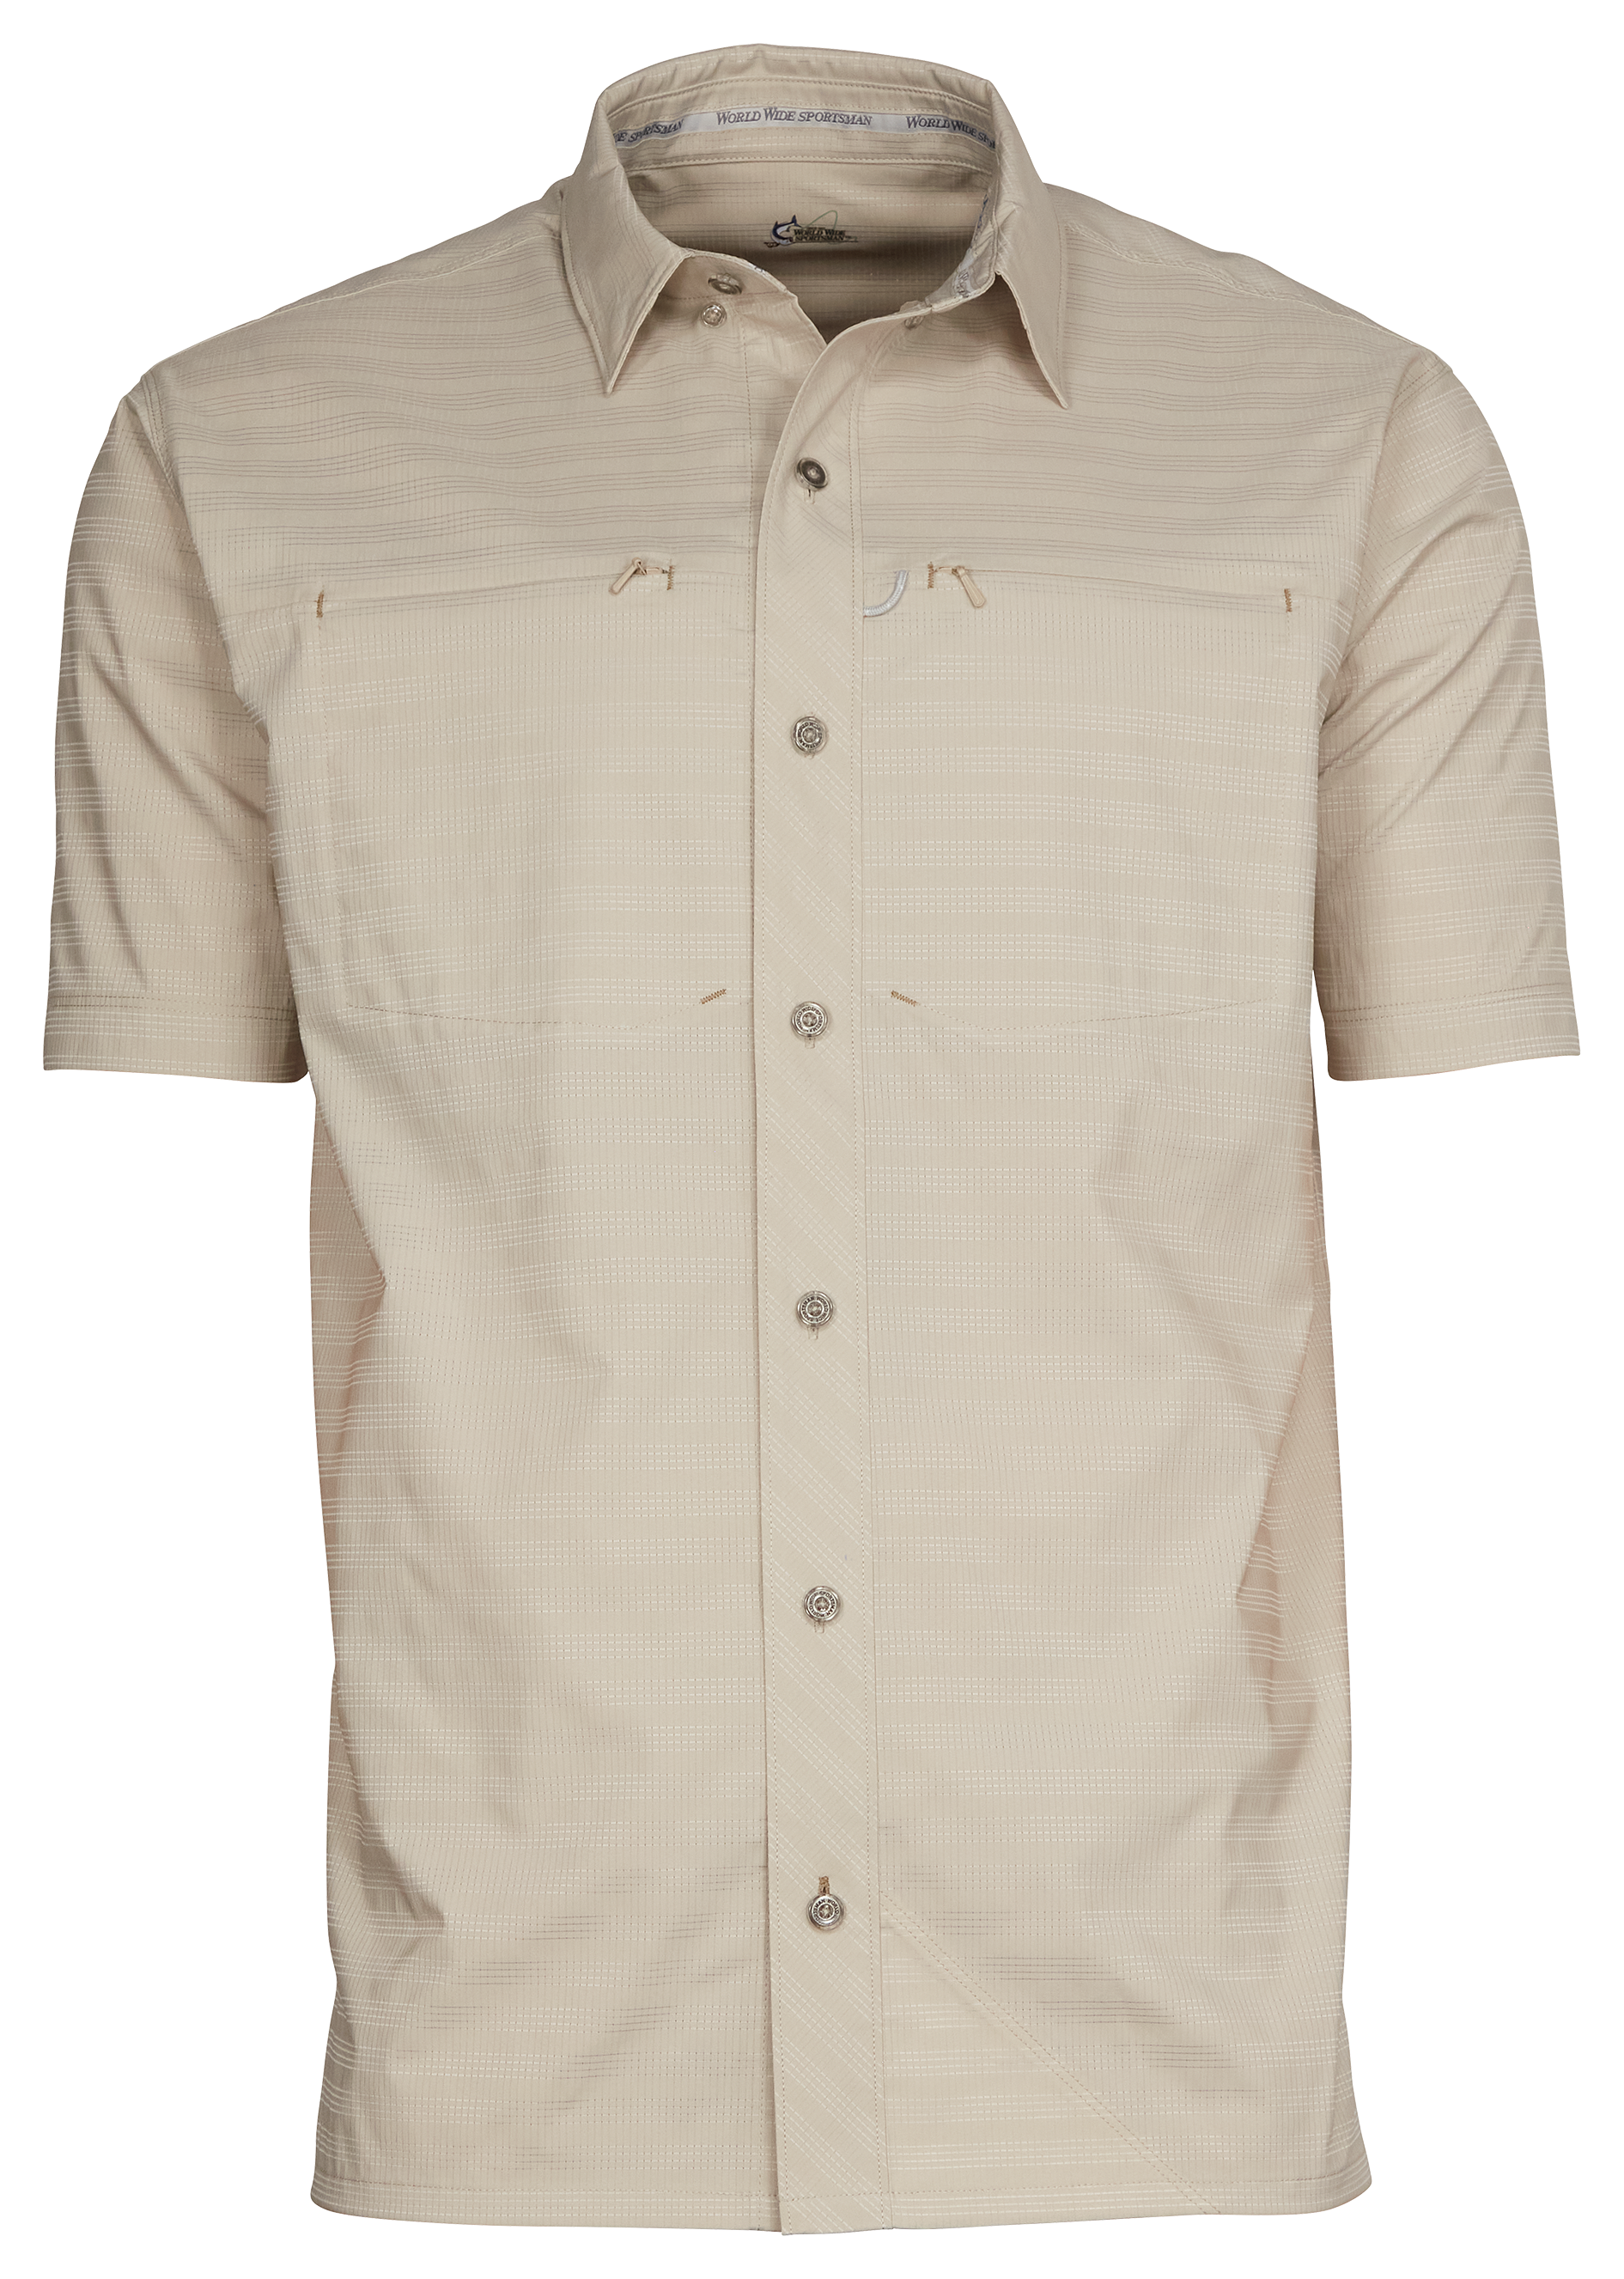 World Wide Sportsman Seacrest 2-Pocket Short-Sleeve Button-Down Shirt for Men - Peyote - XL